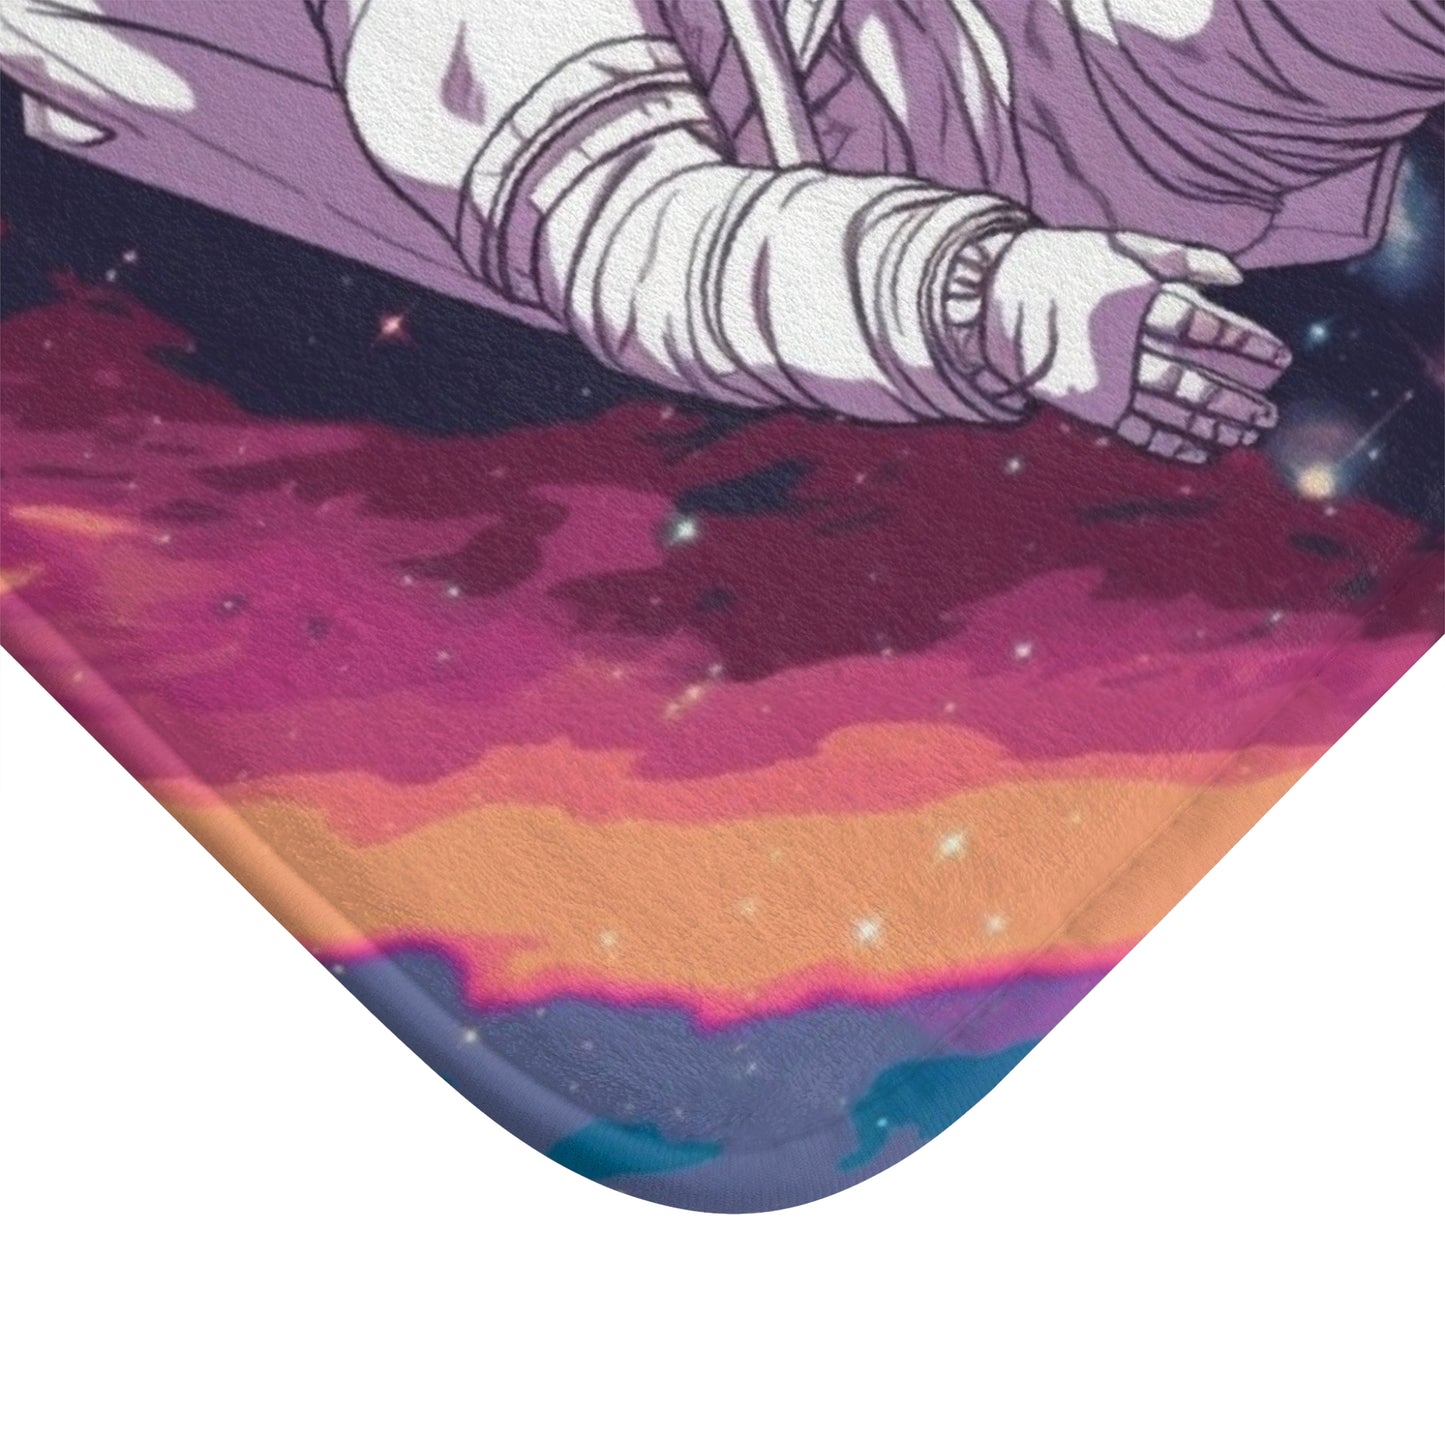 Astro Pioneer - Star-filled Galaxy Illustration - Bath Mat